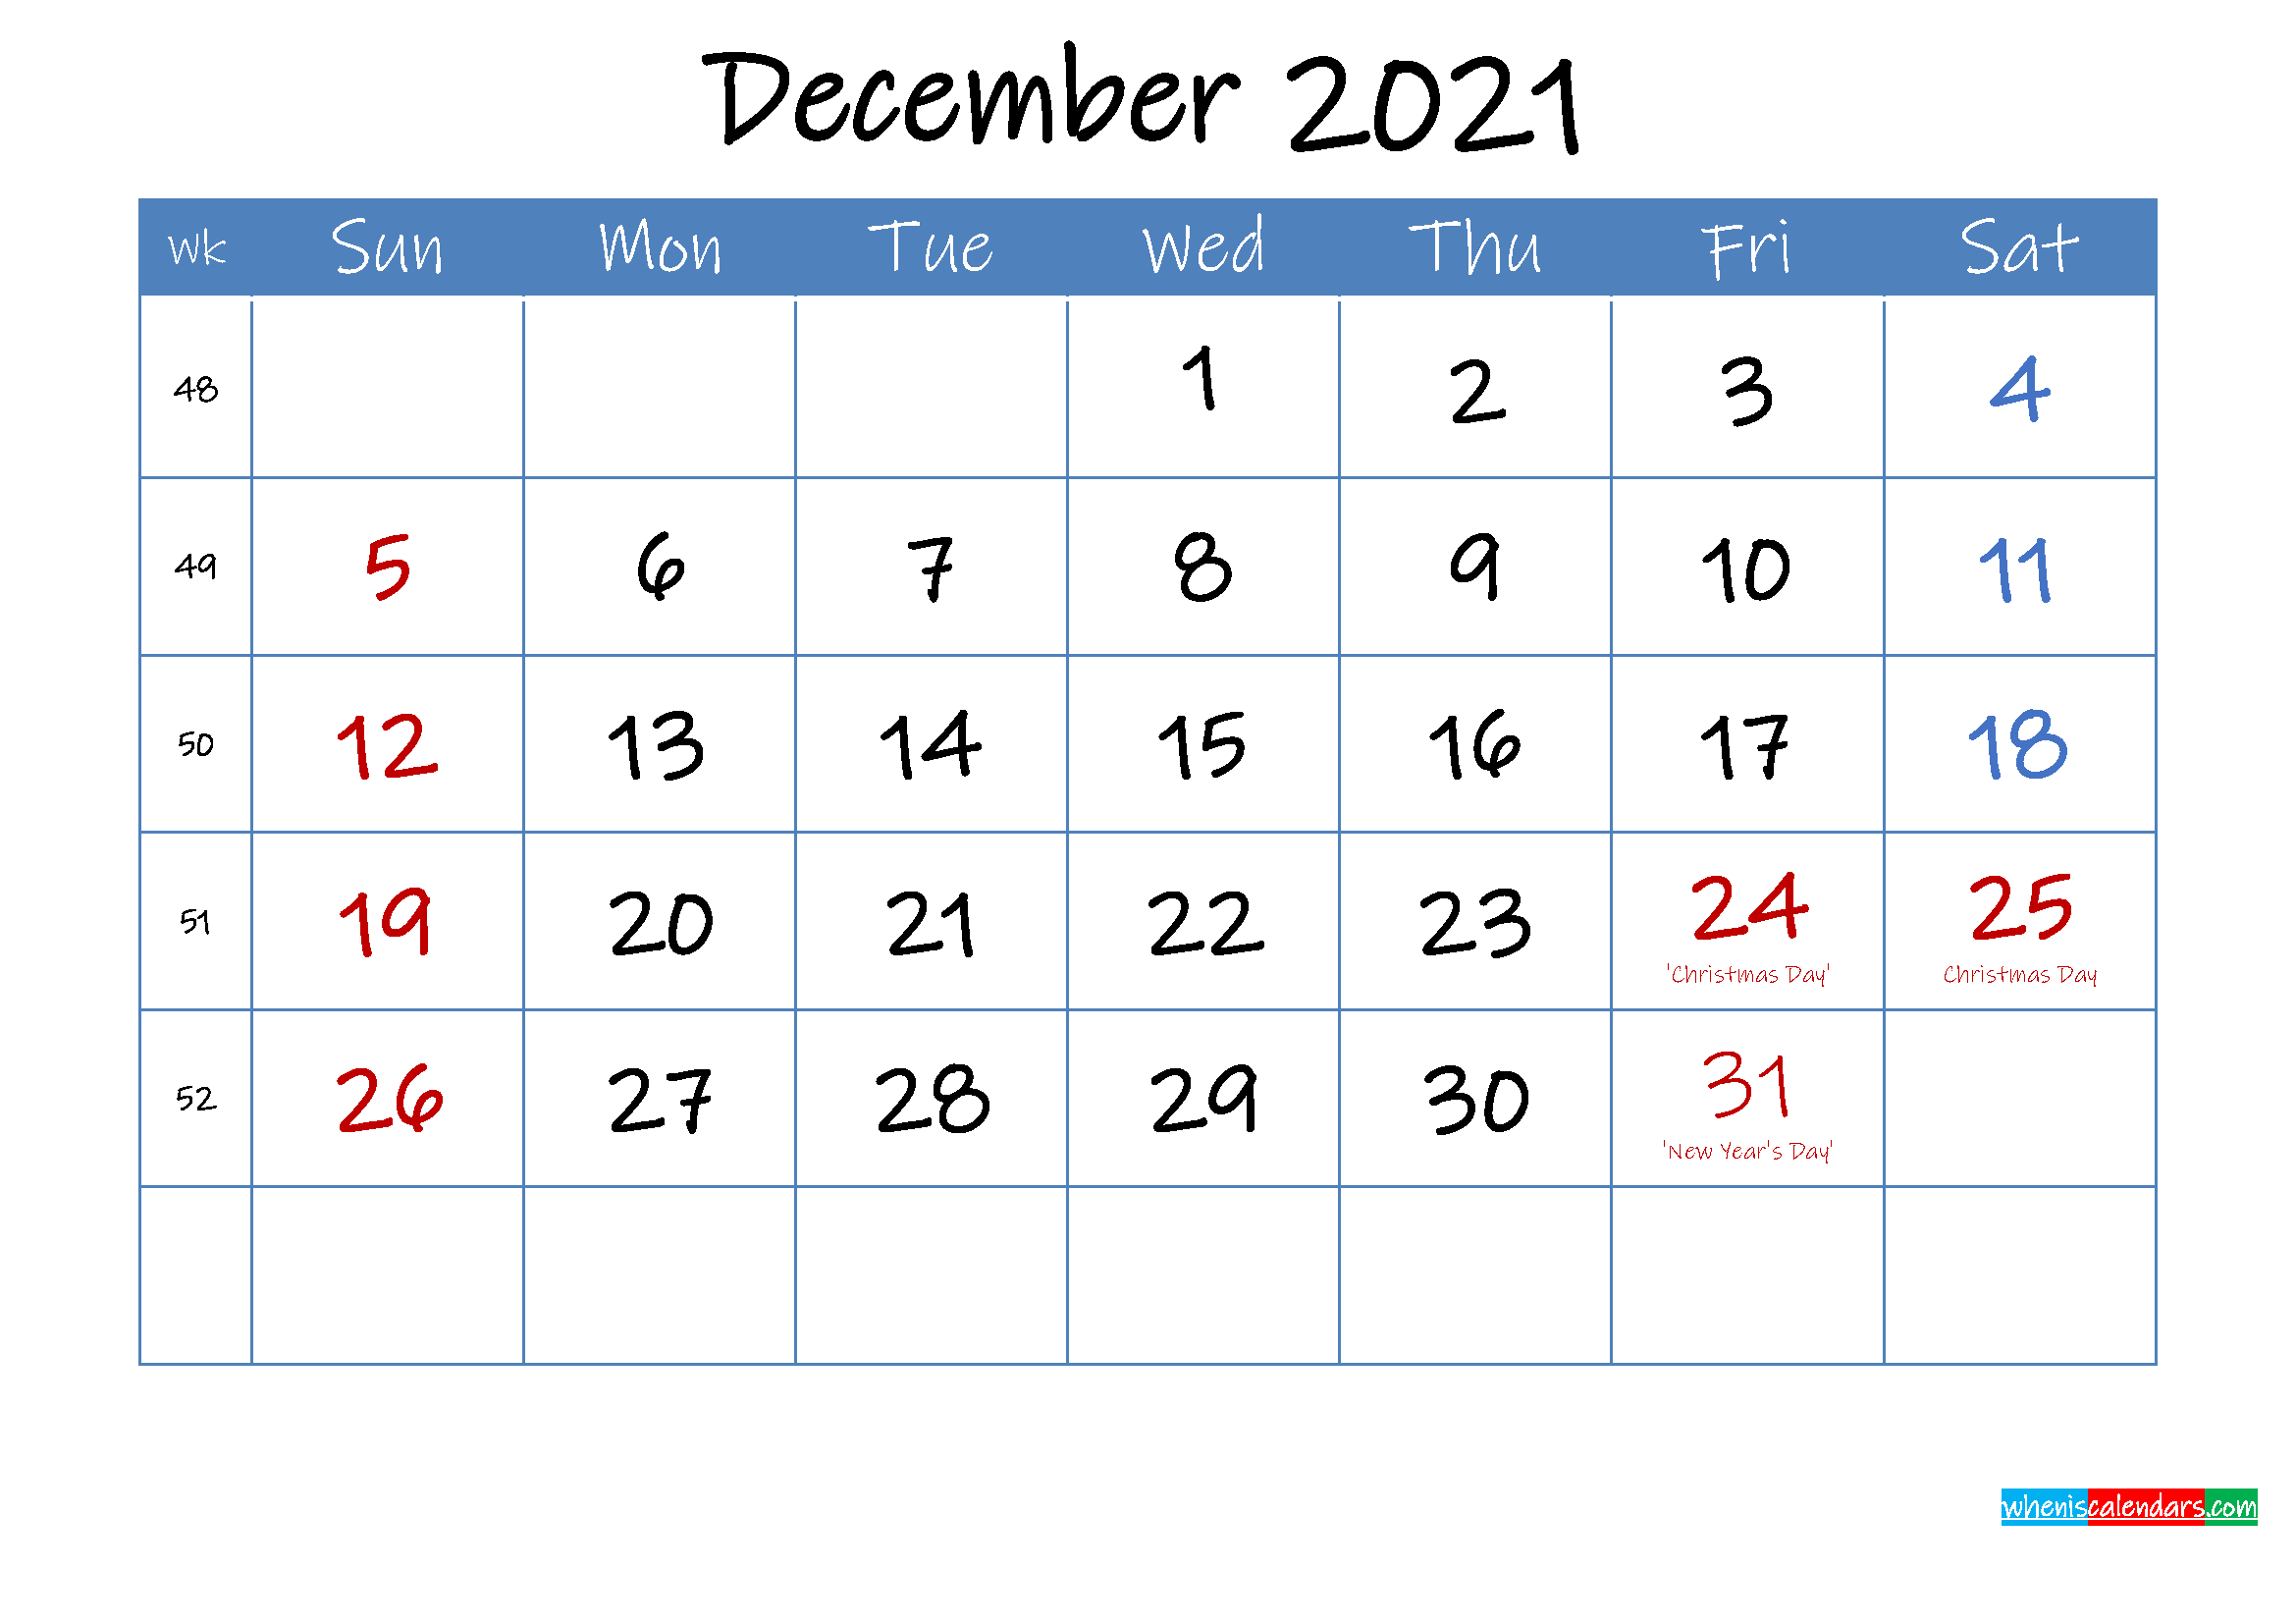 Printable December 2021 Calendar Word - Template Ink21M24 Calendar Of December 2021